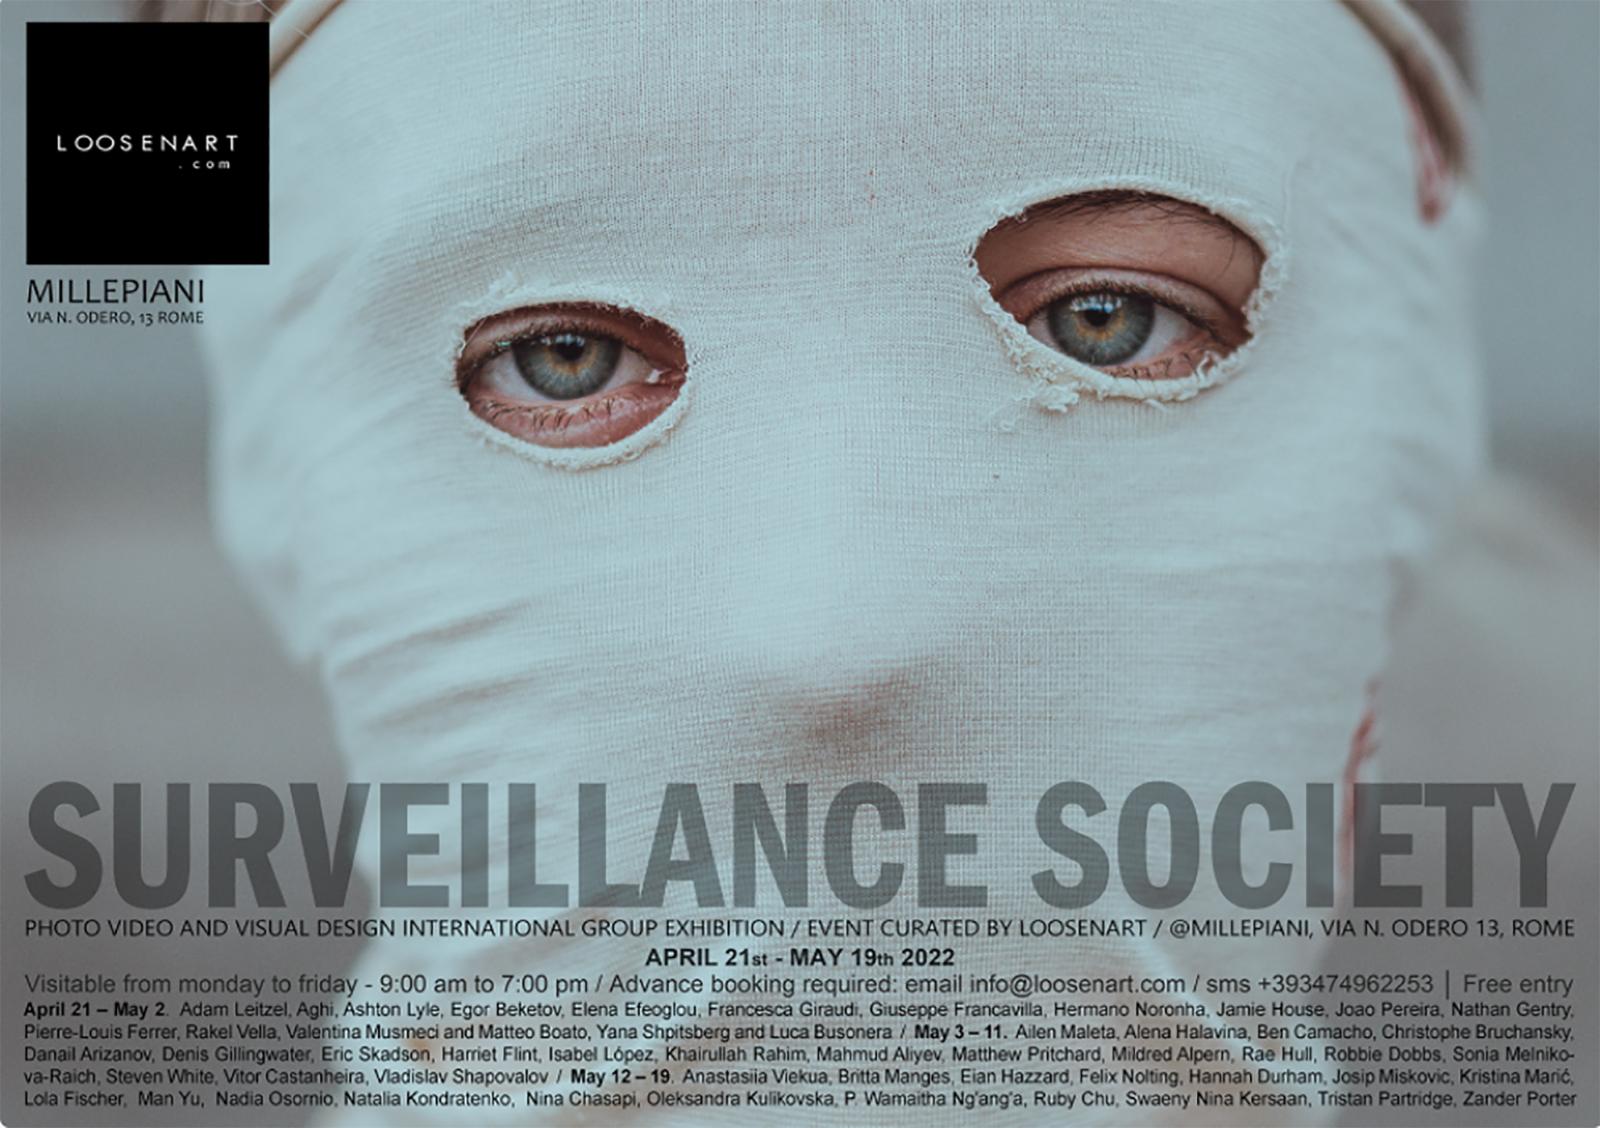 Surveillance Society